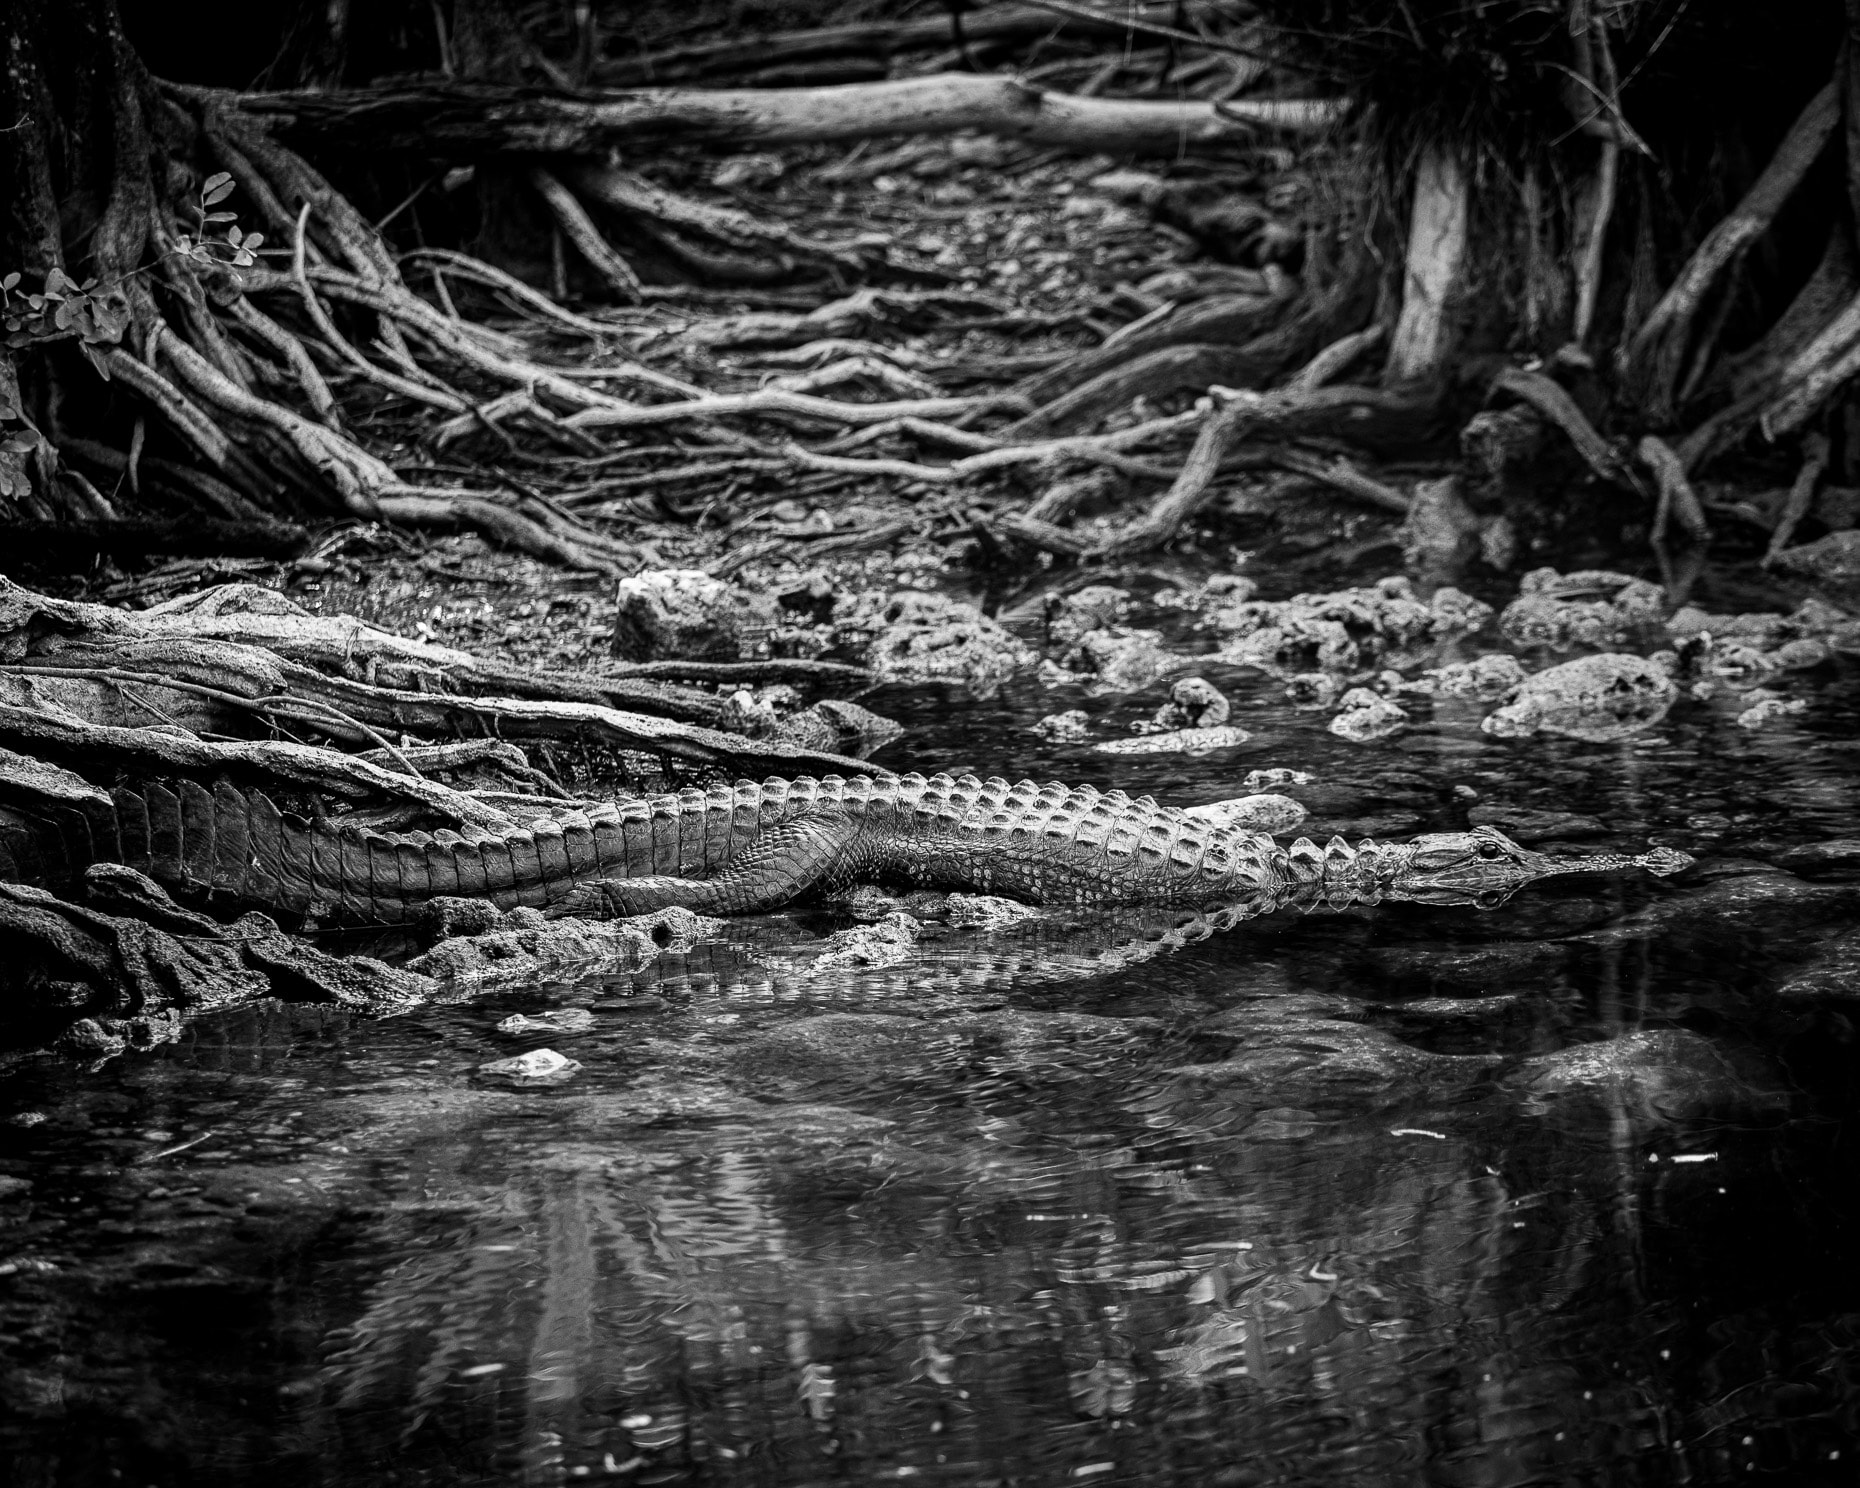 Alligator edge of canal 